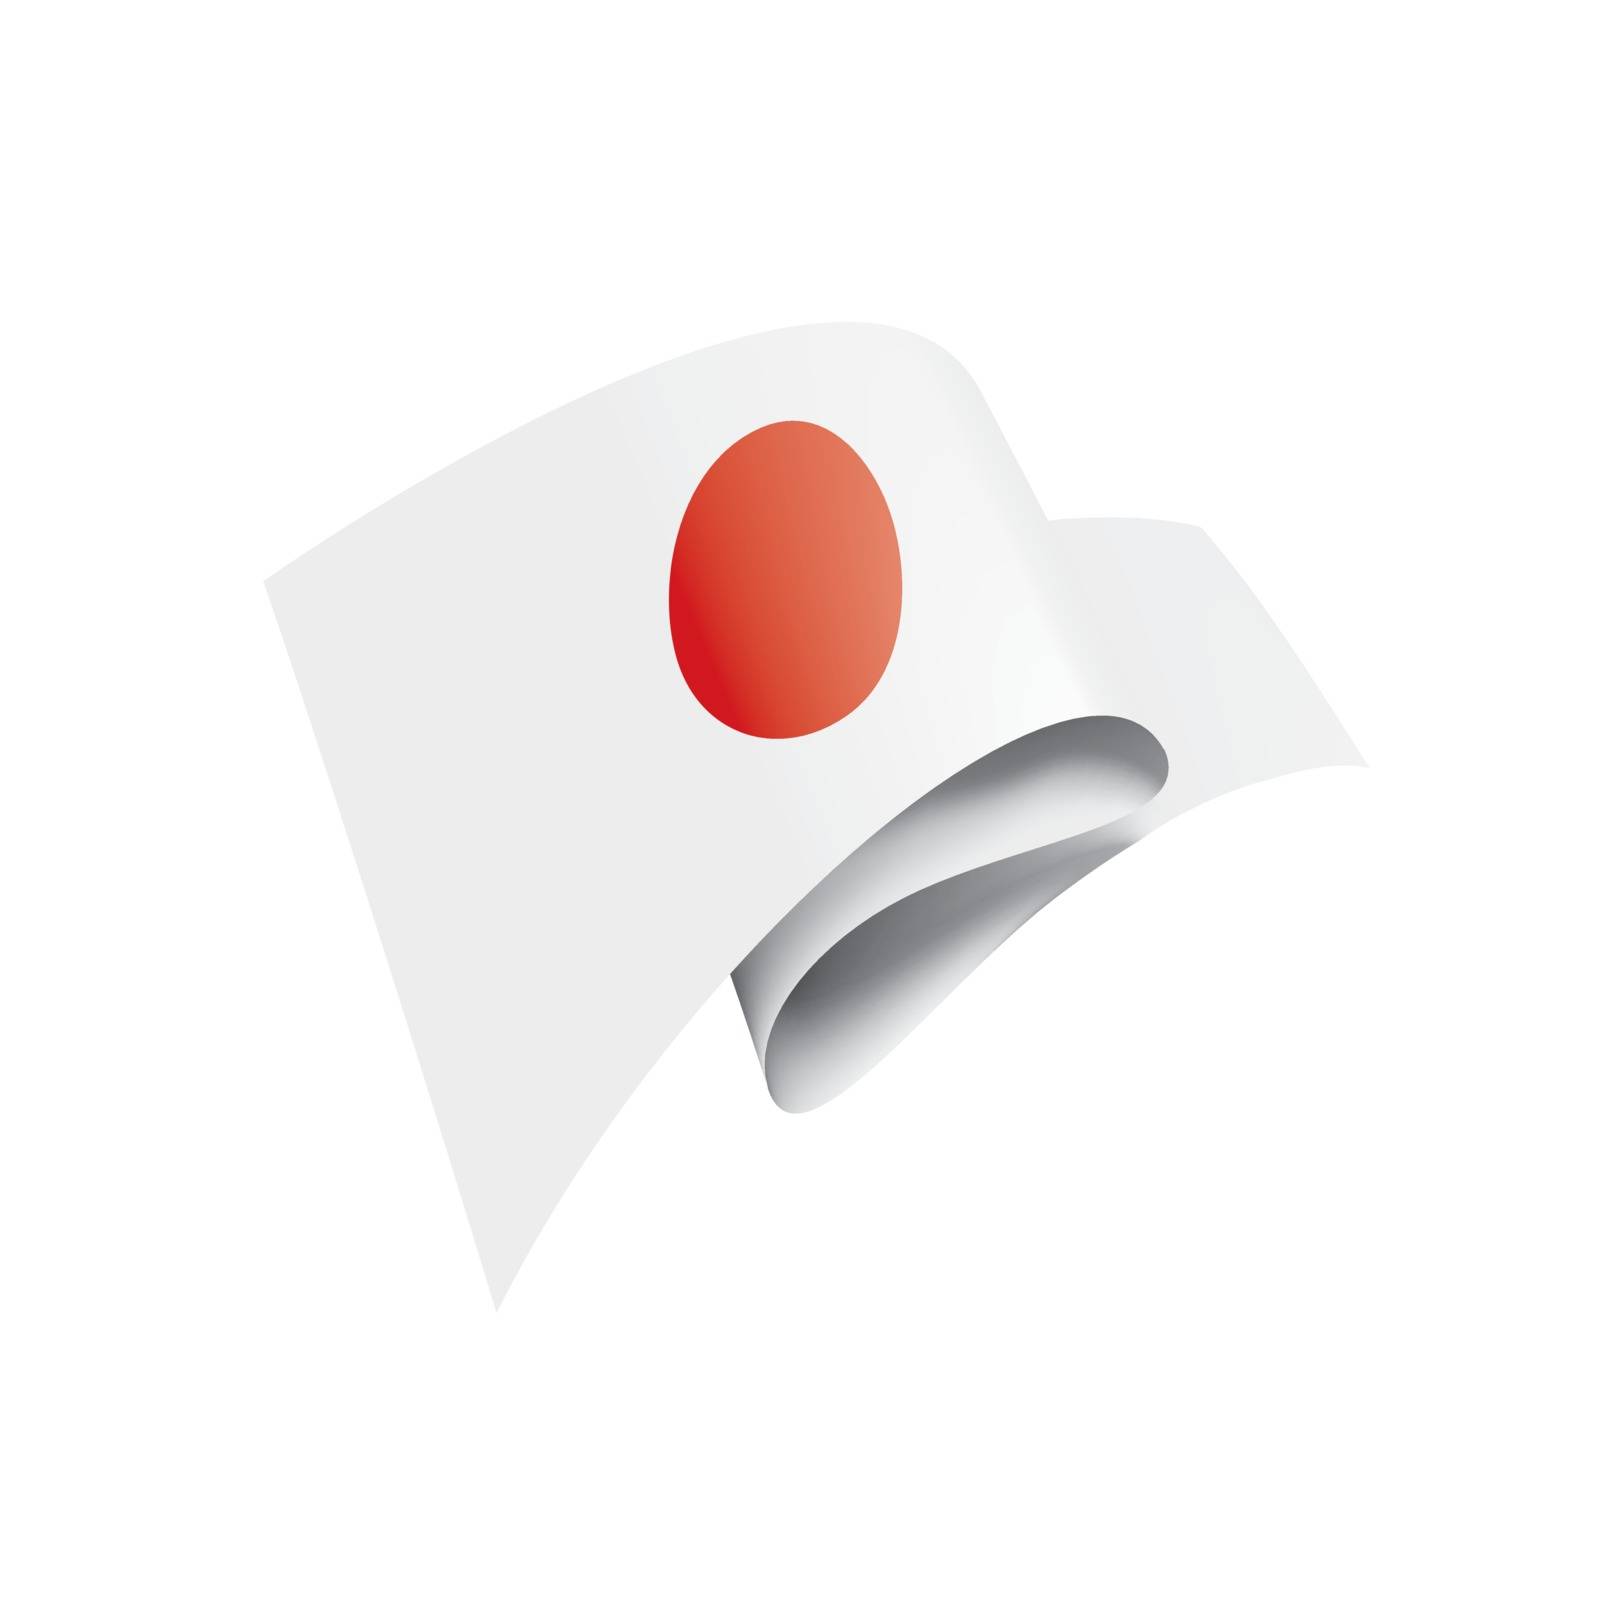 Japan national flag, vector illustration on a white background